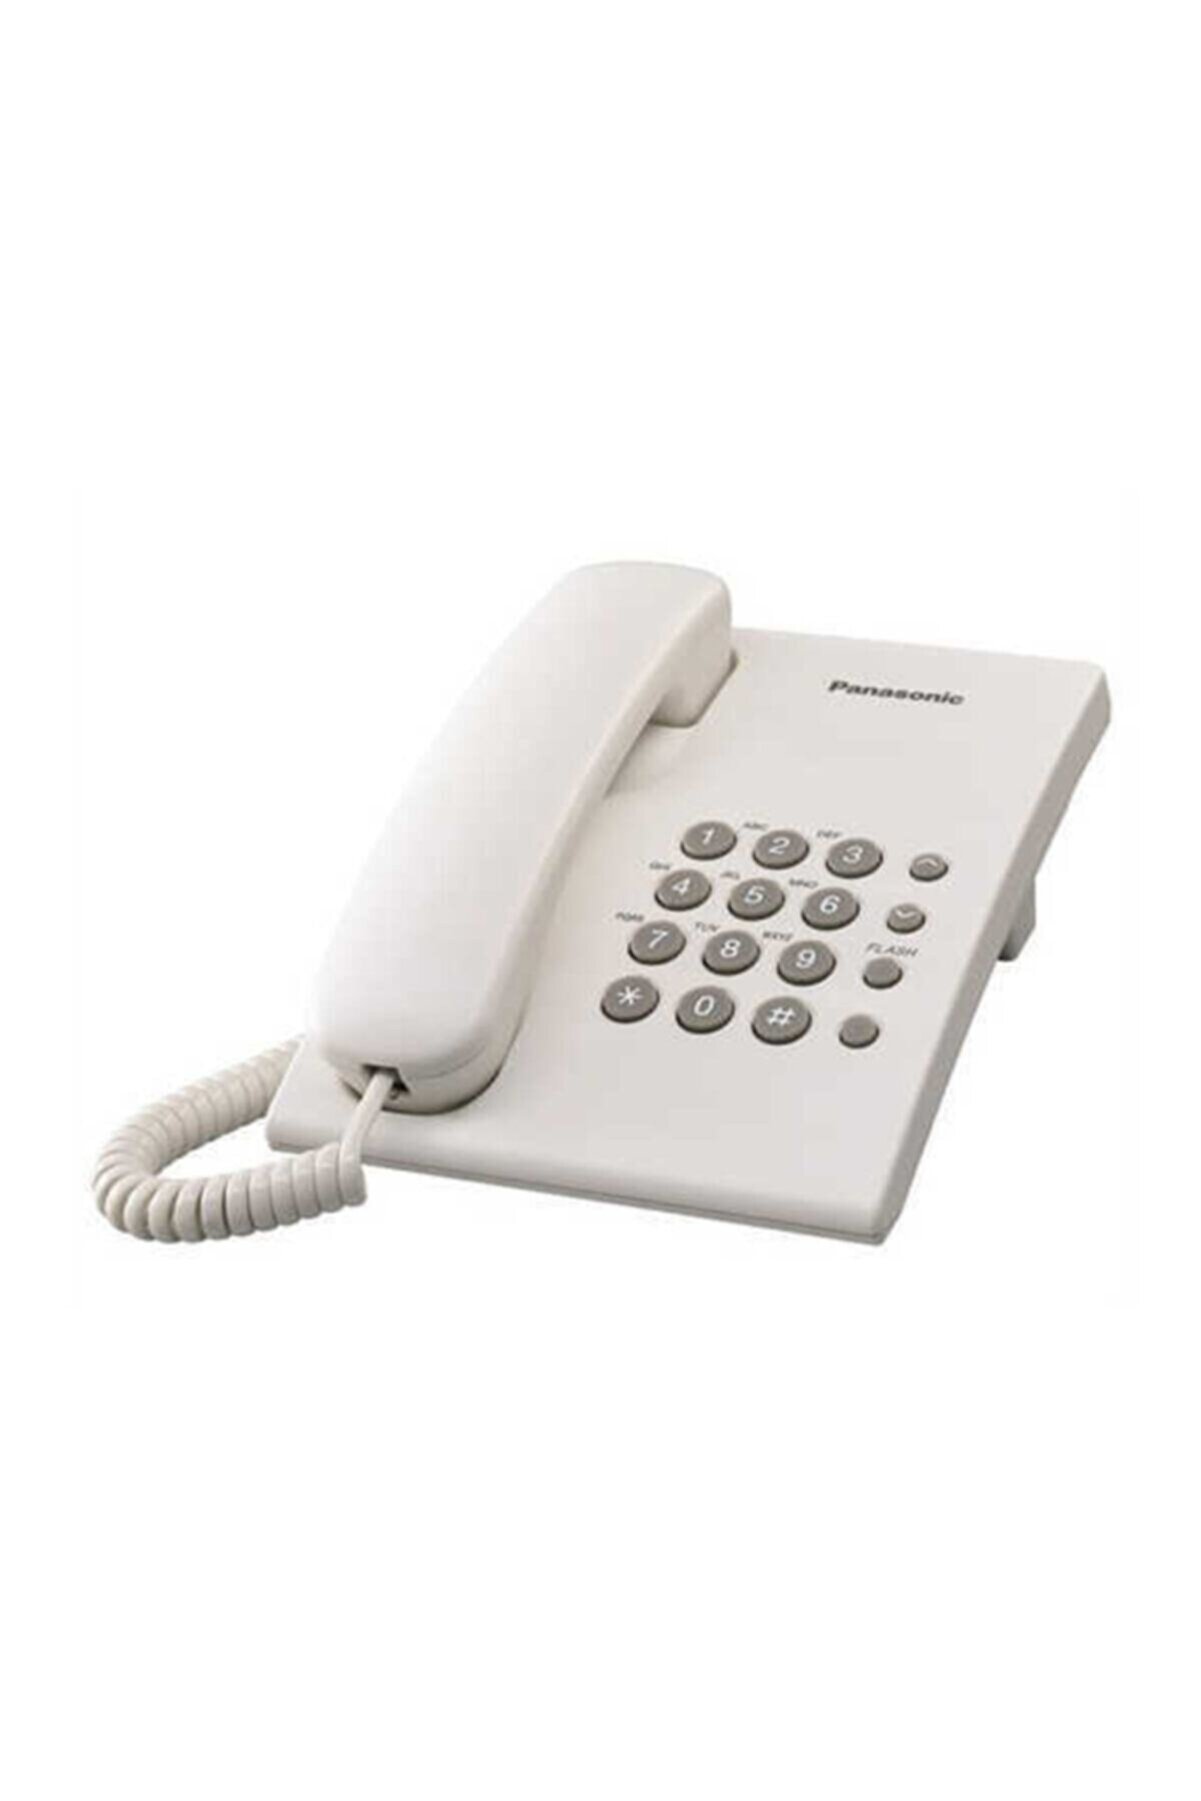 Panasonic Kx-ts500tr Masa Telefonu (BEYAZ)